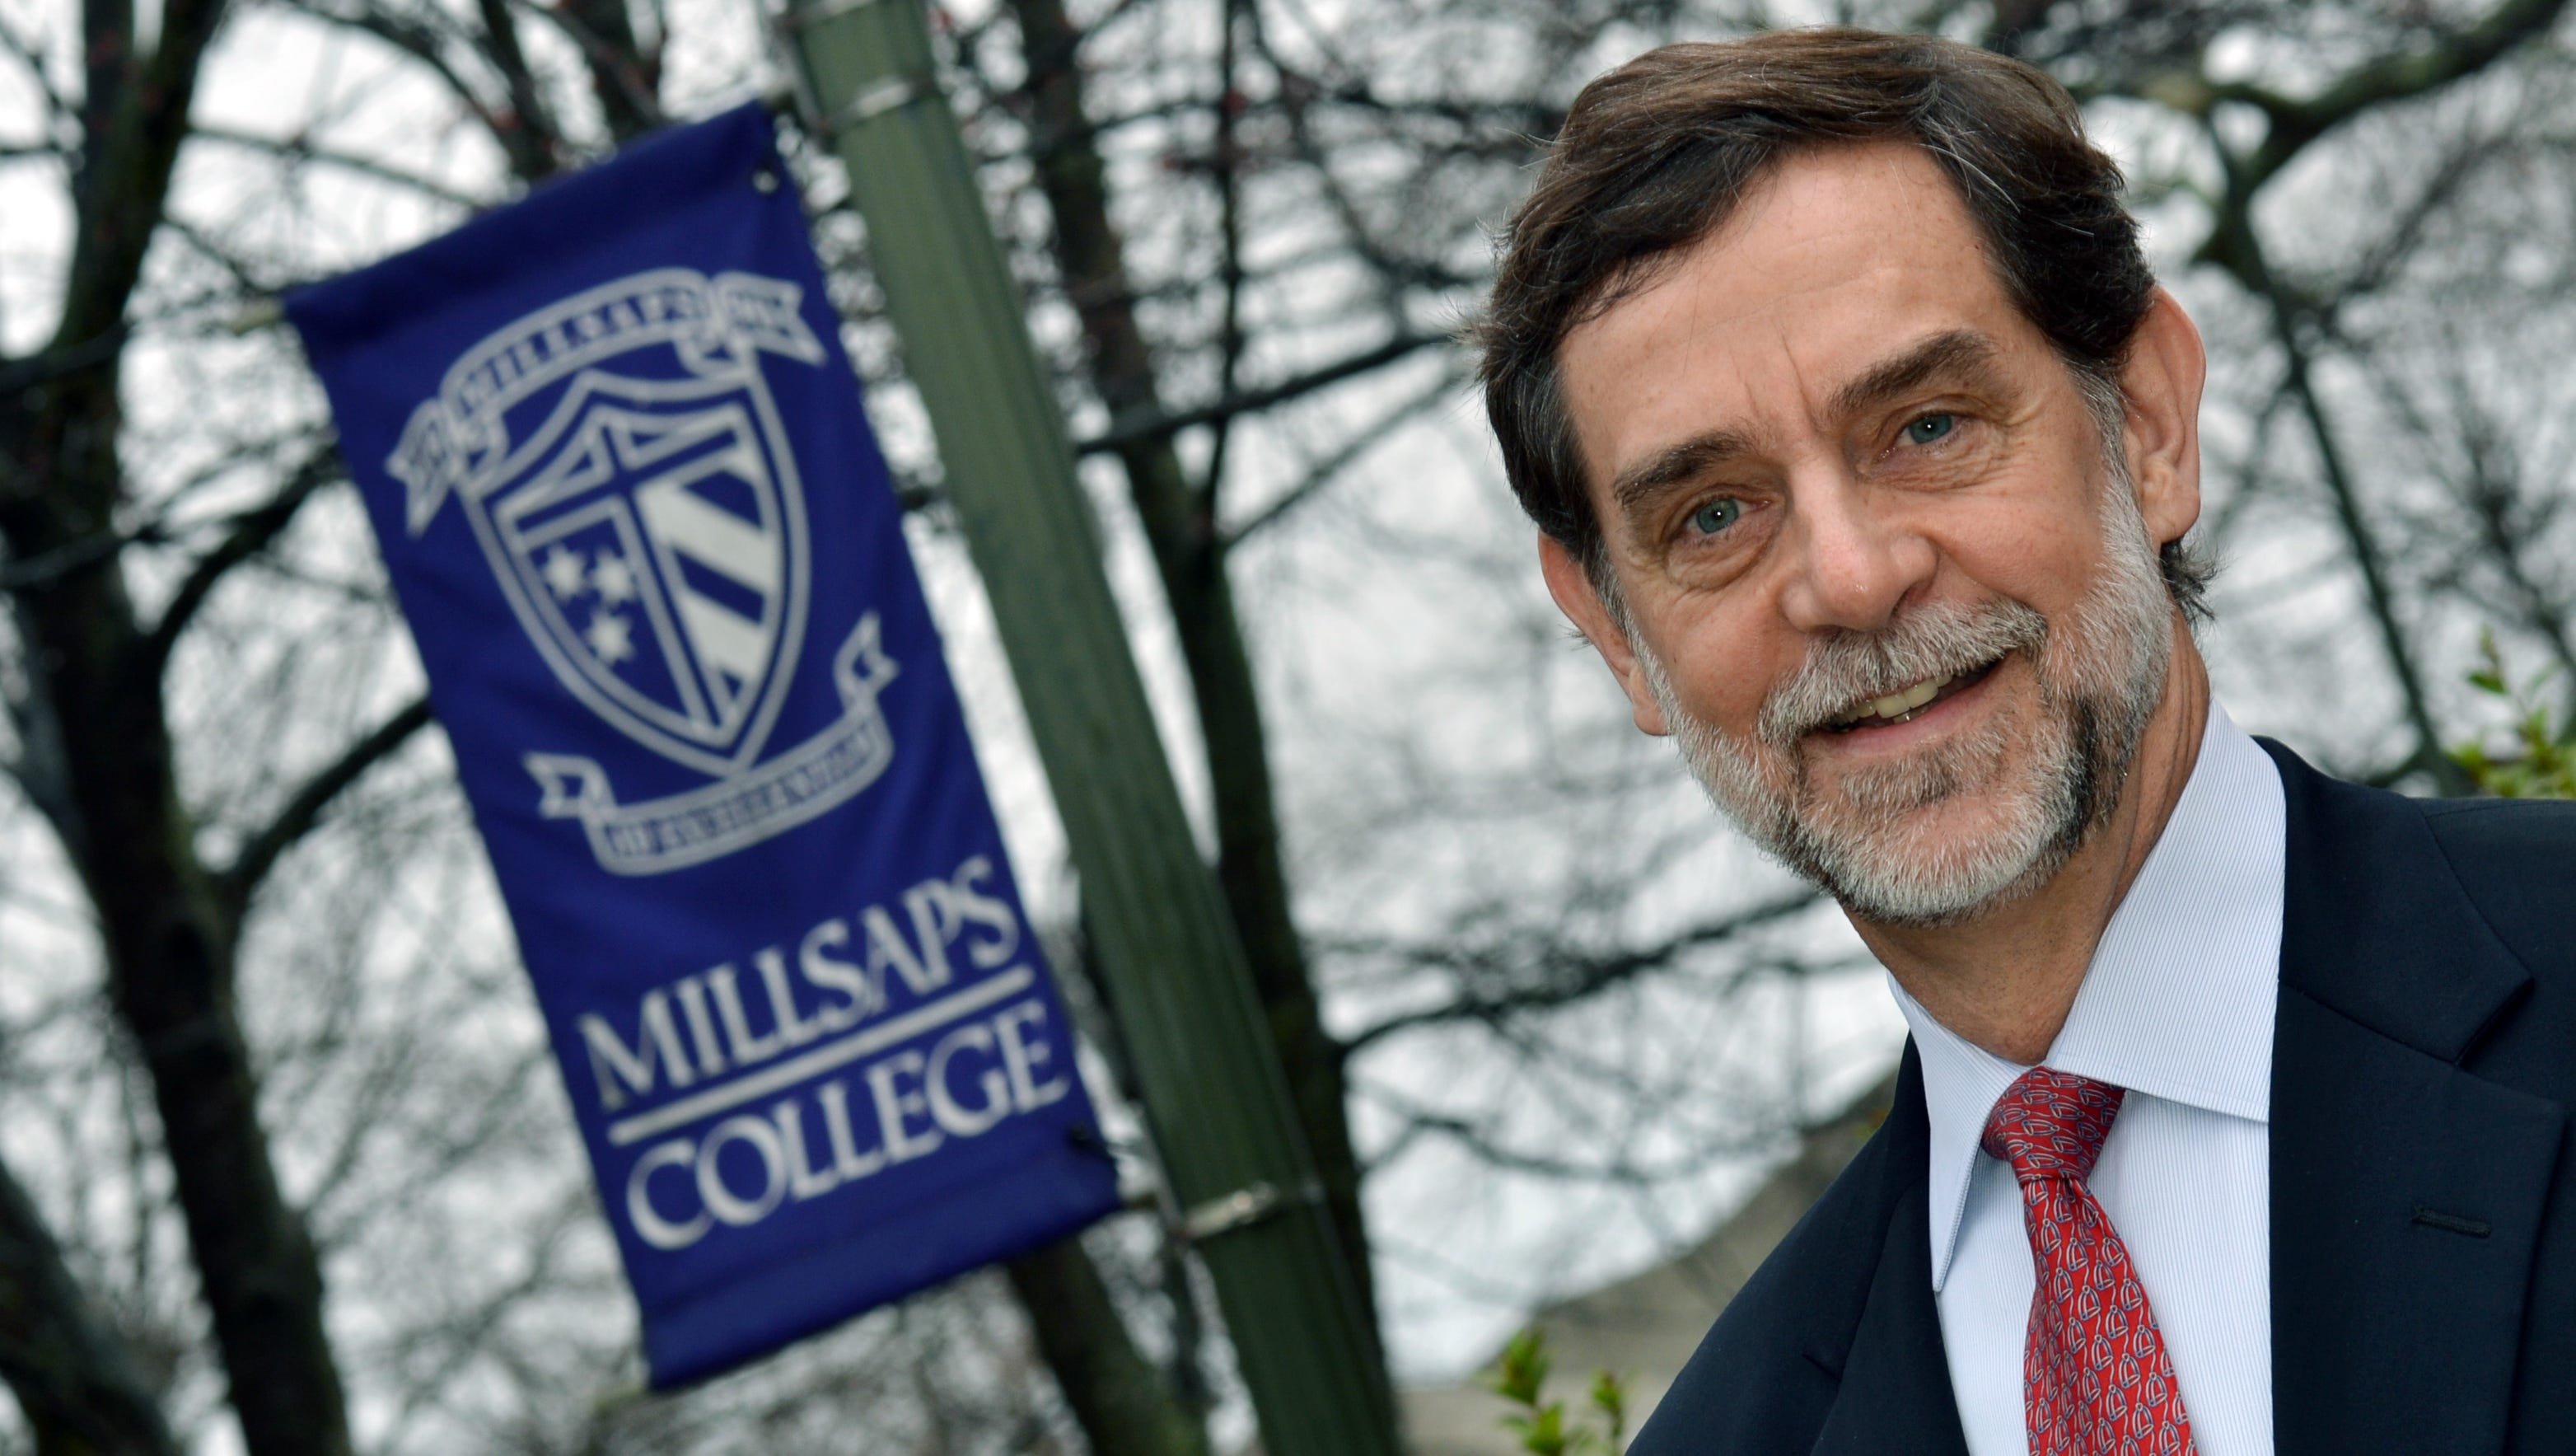 Pearigen resigns as president at Millsaps College. Trustees focused ... - Clarion Ledger